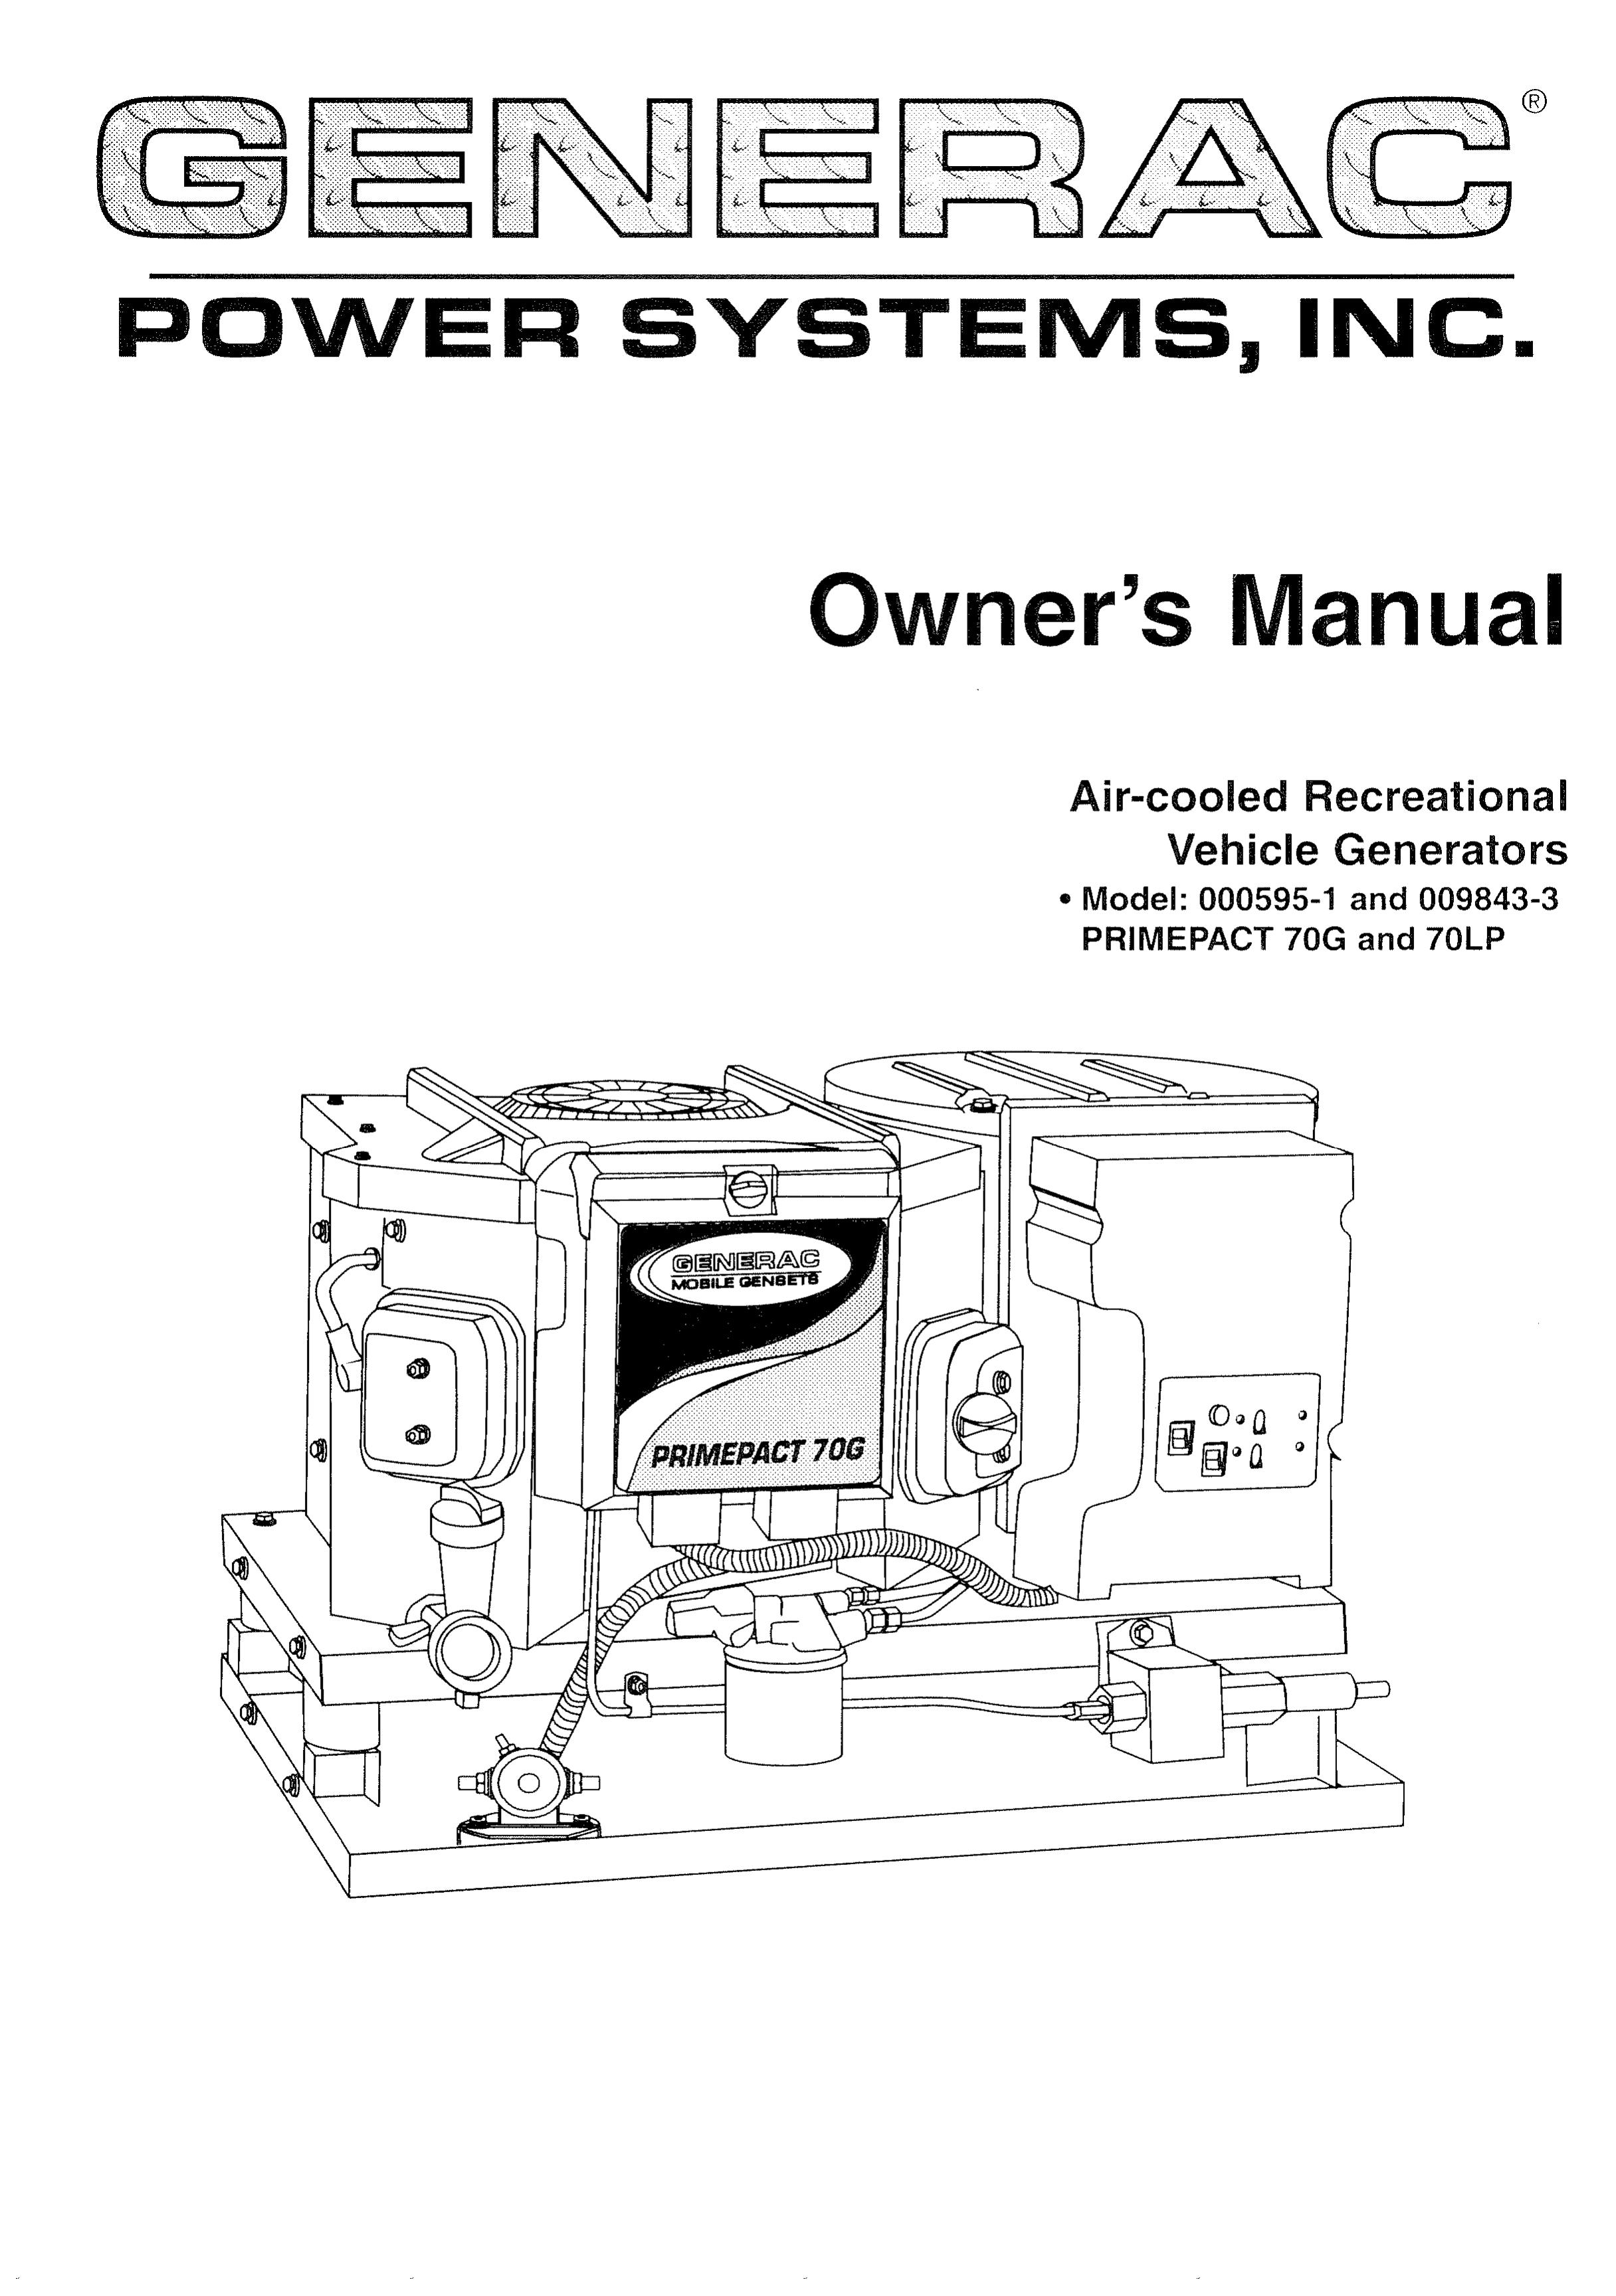 Generac Power Systems 000595-1 Portable Generator User Manual